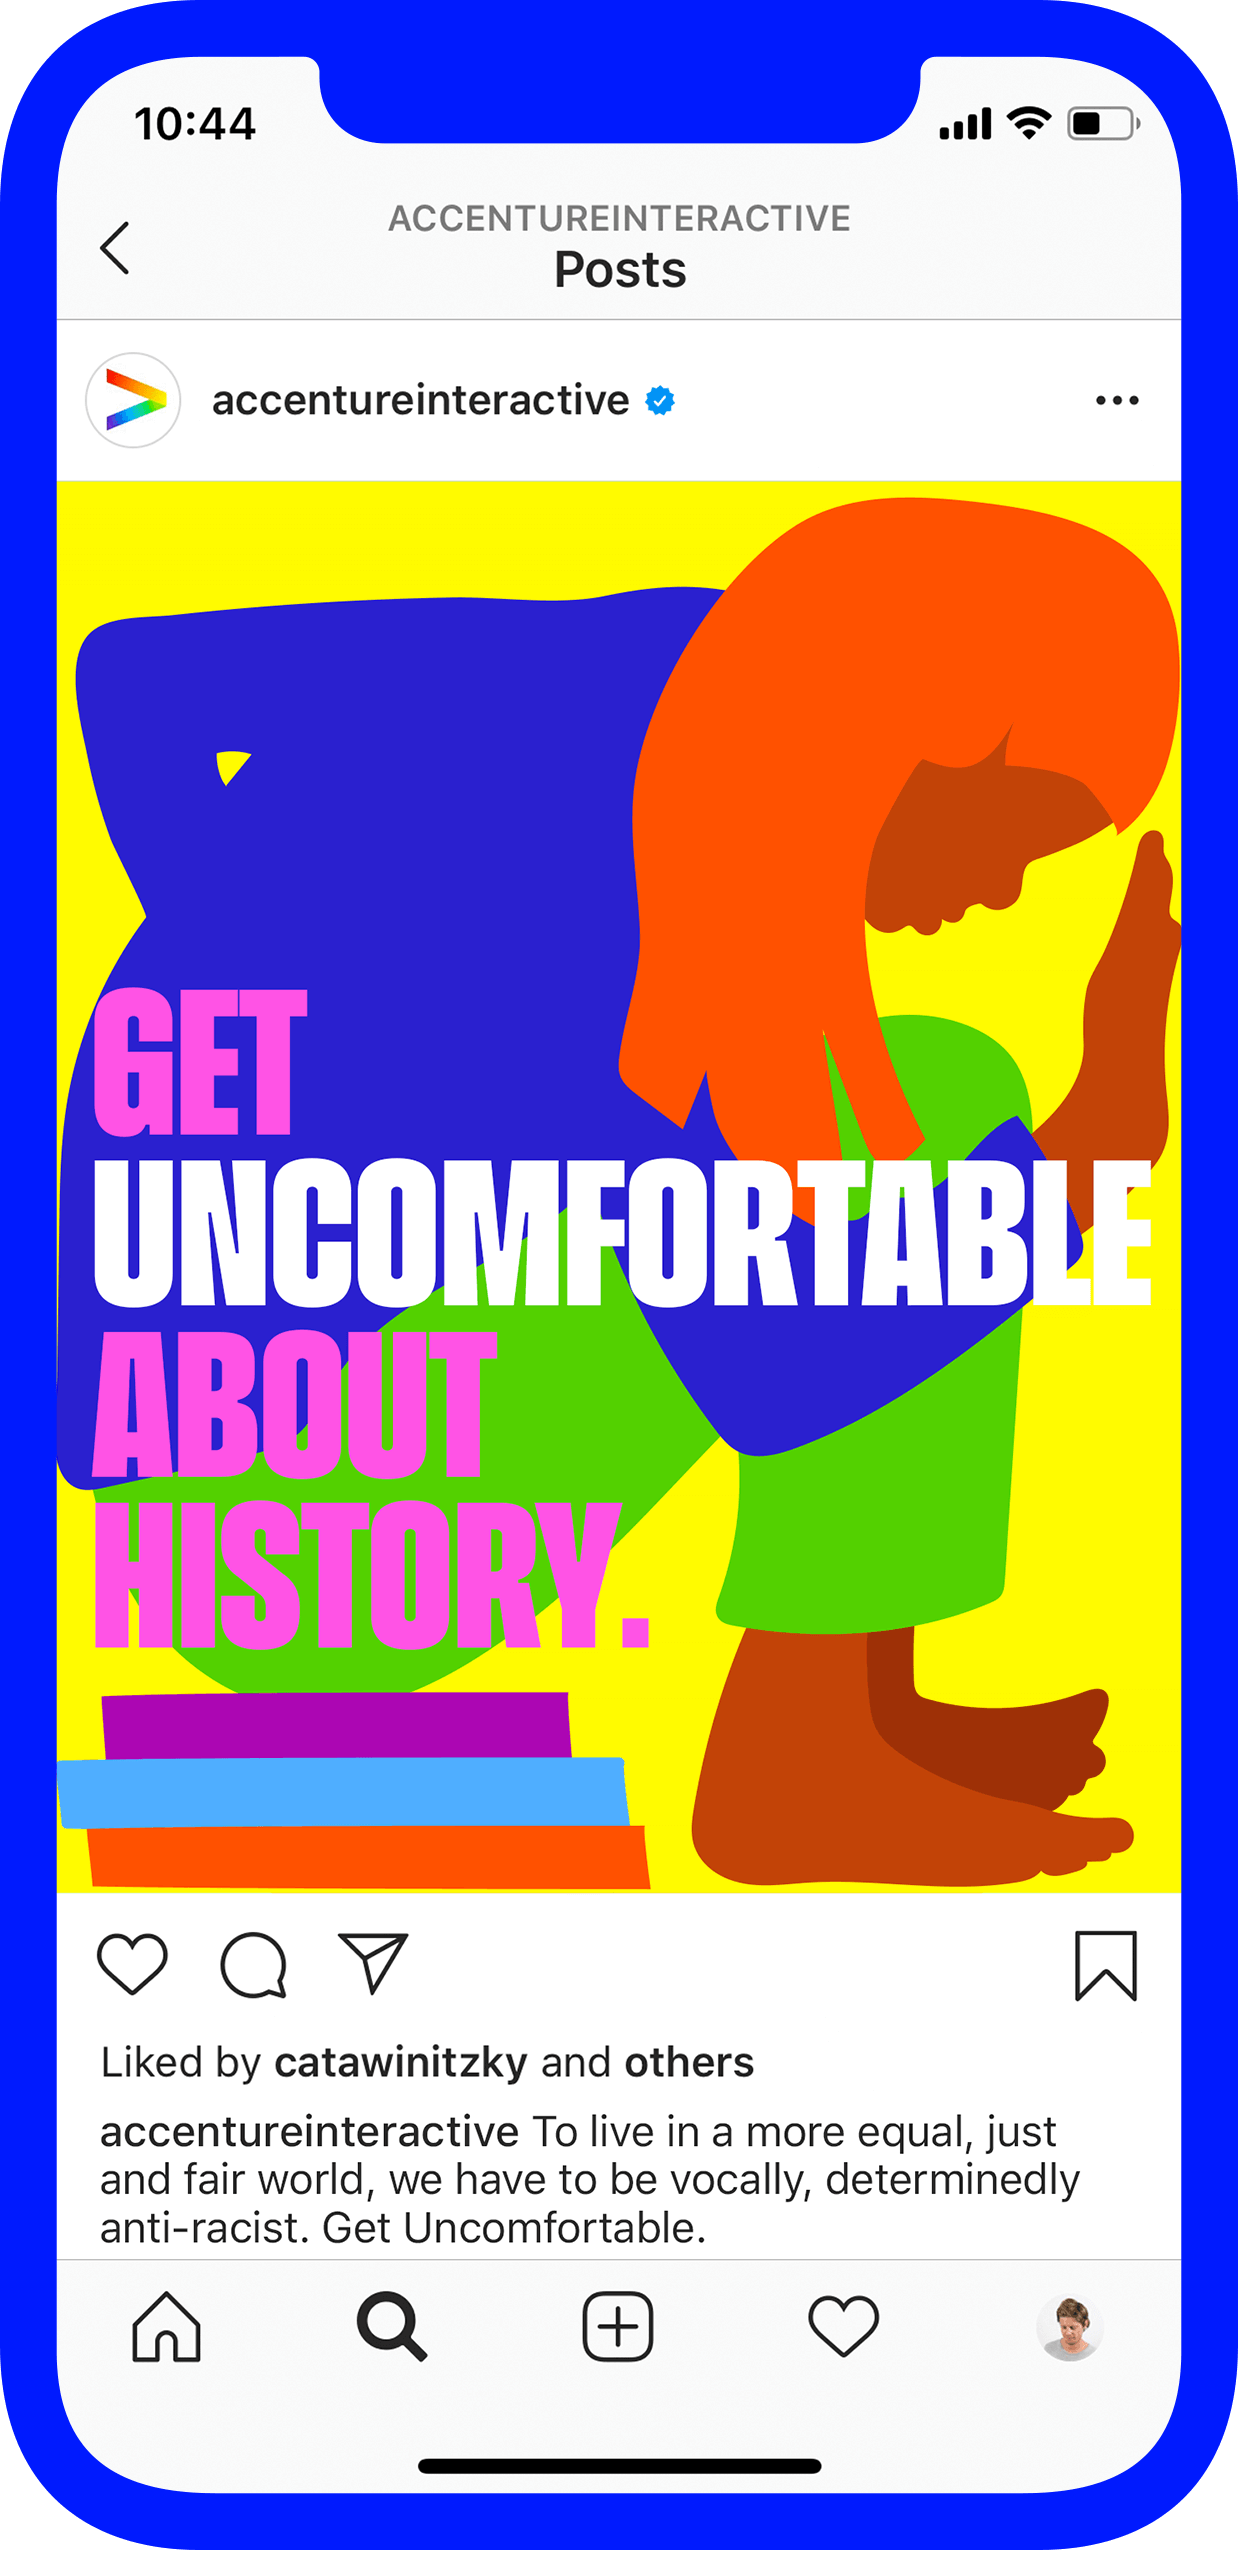 Get-Uncomfortable-Mob-01